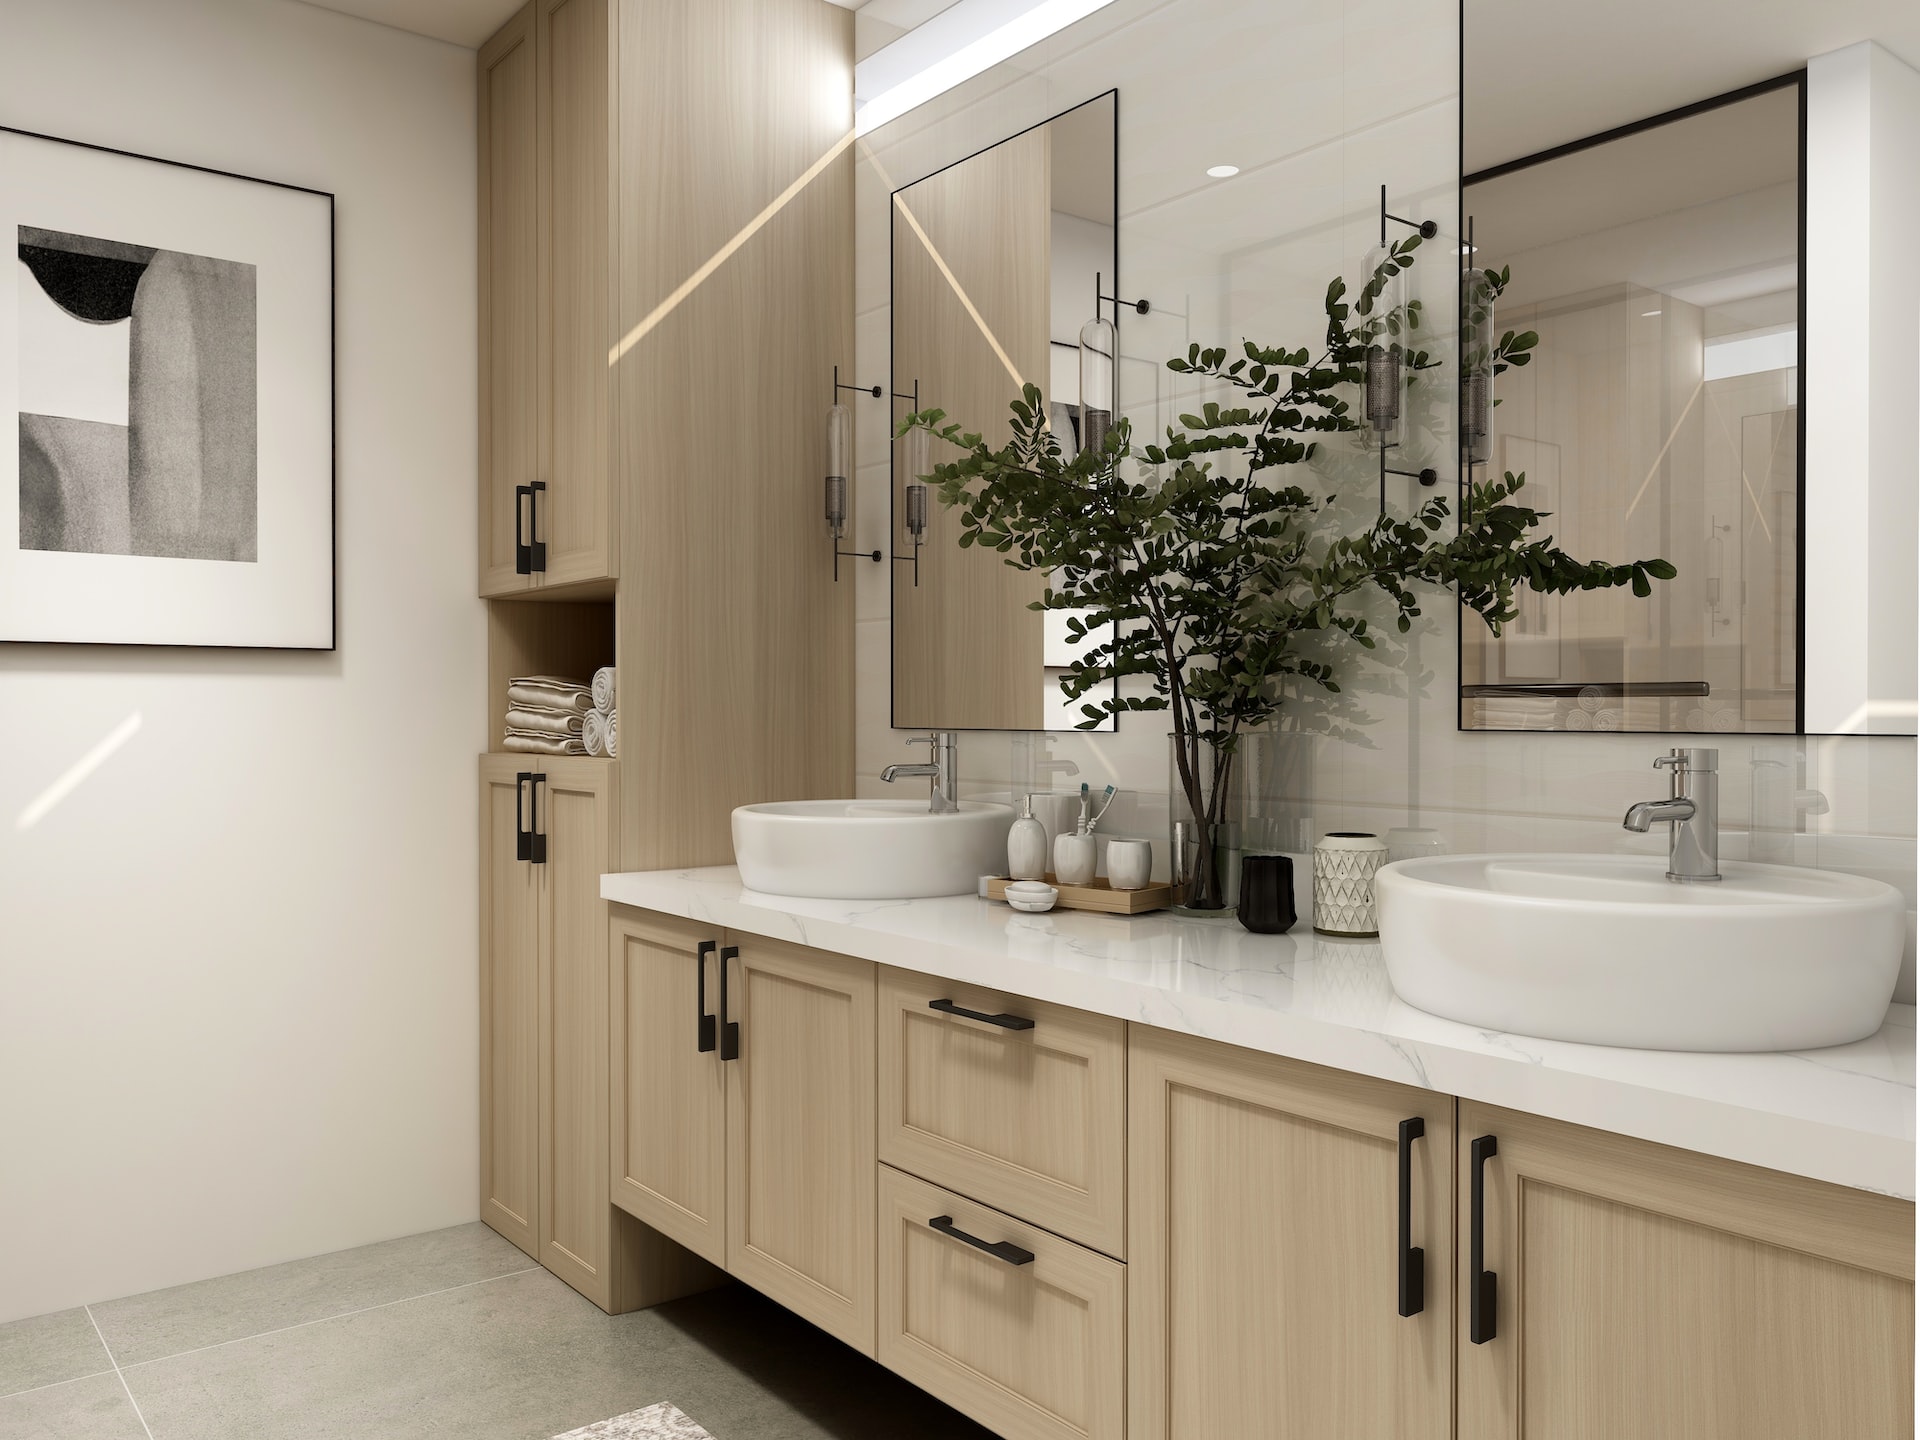 How to Design the Perfect Double Vanity Bathroom